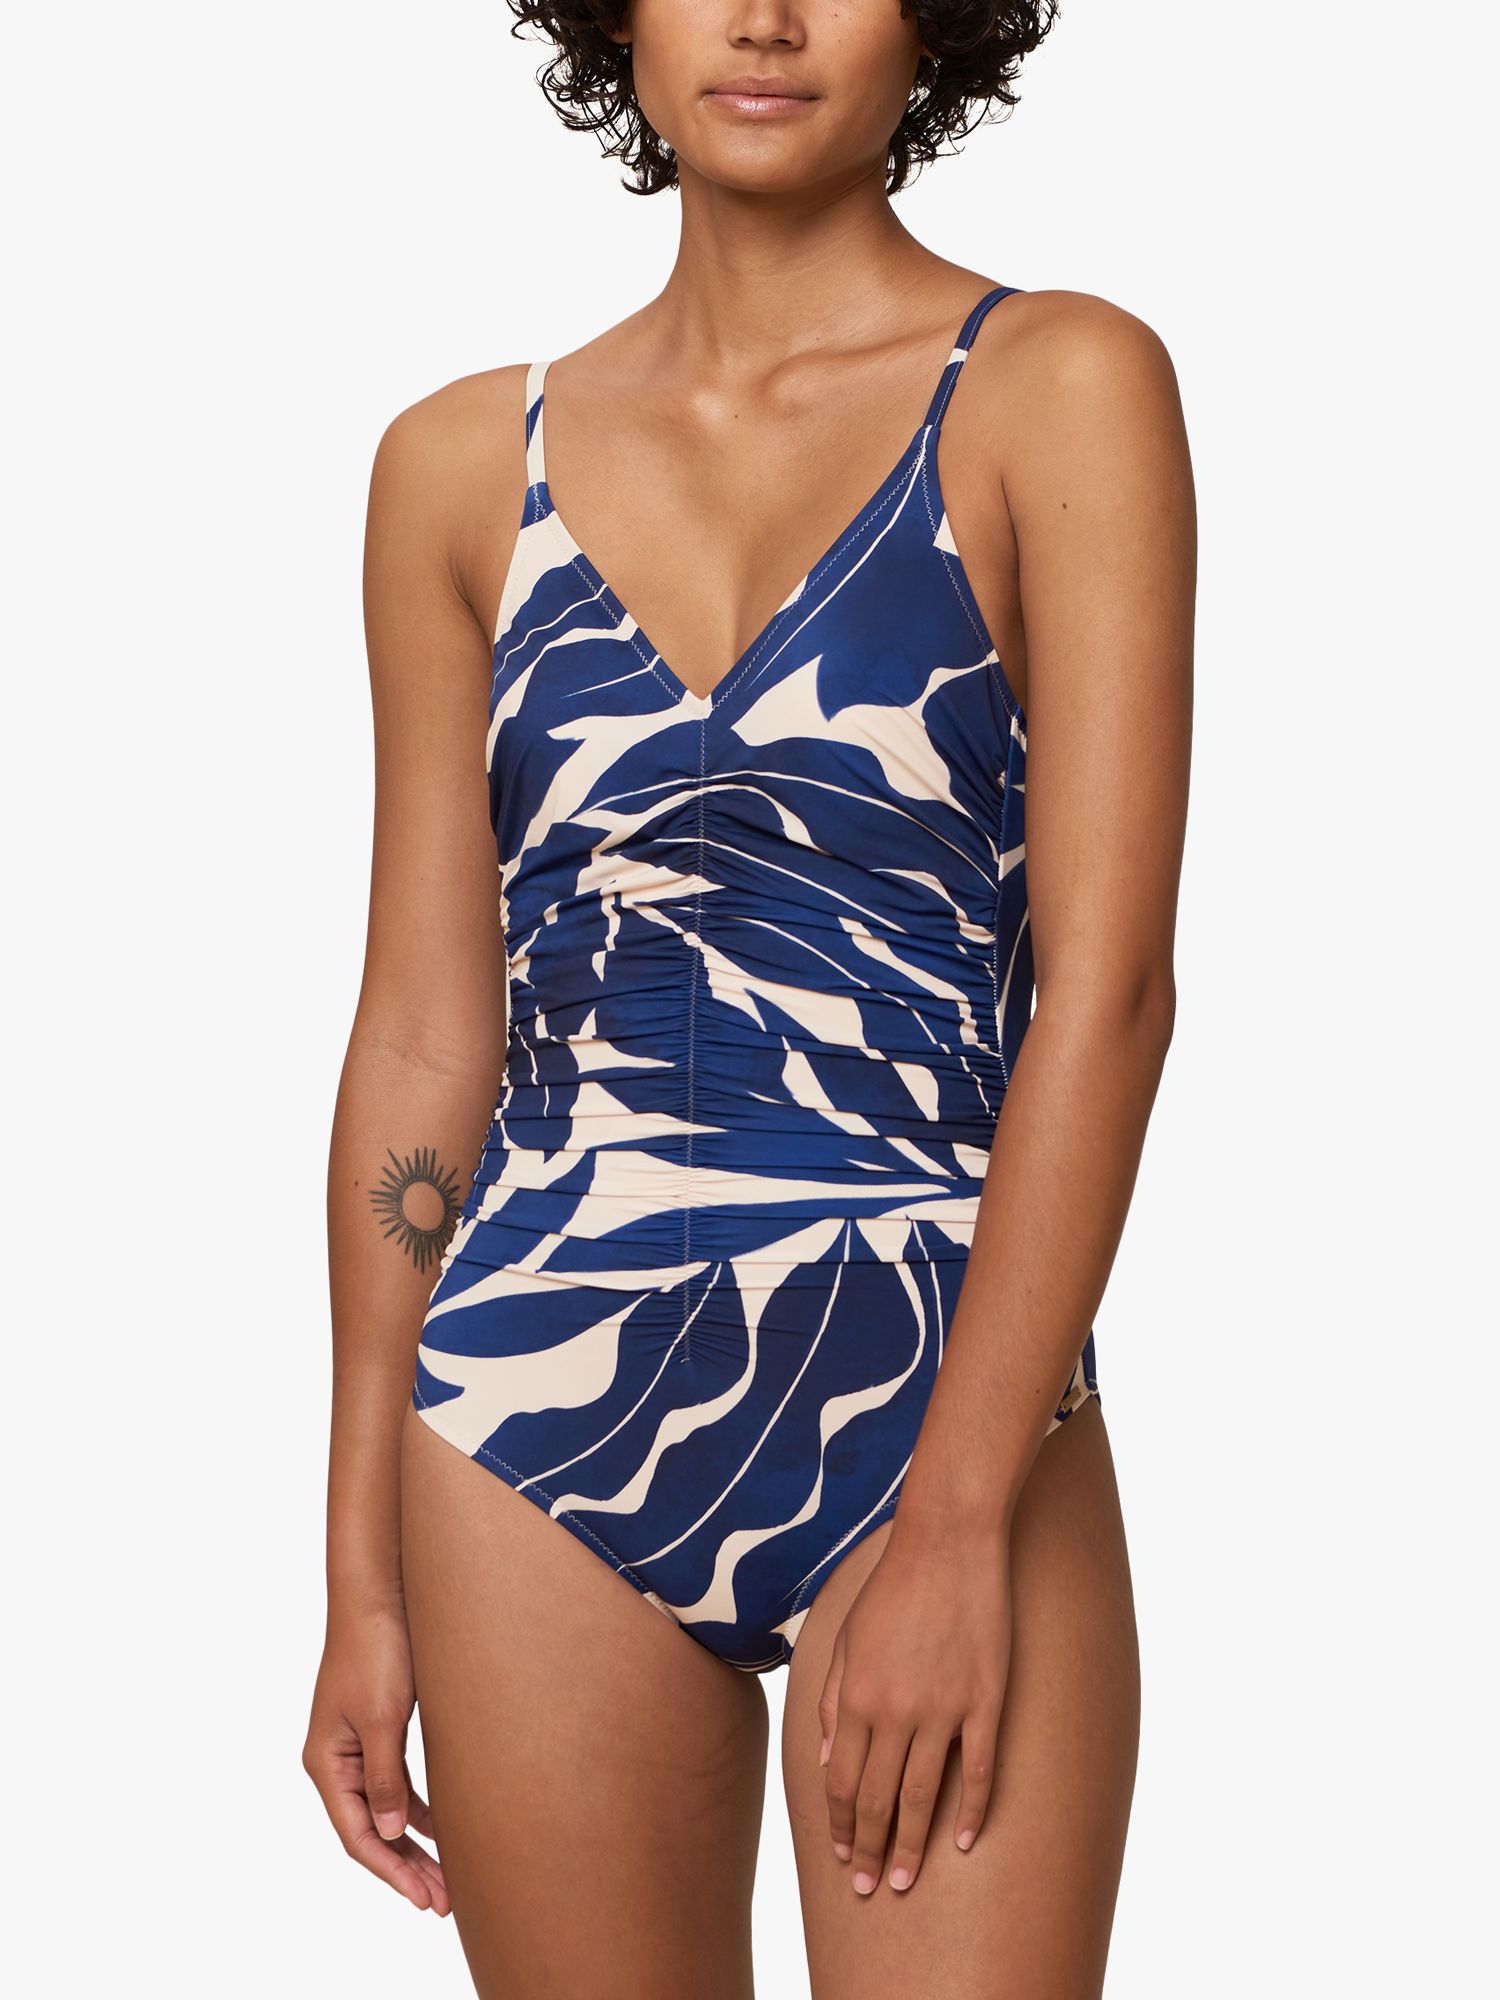 Triumph Summer Allure Swimsuit, Blue, 38C